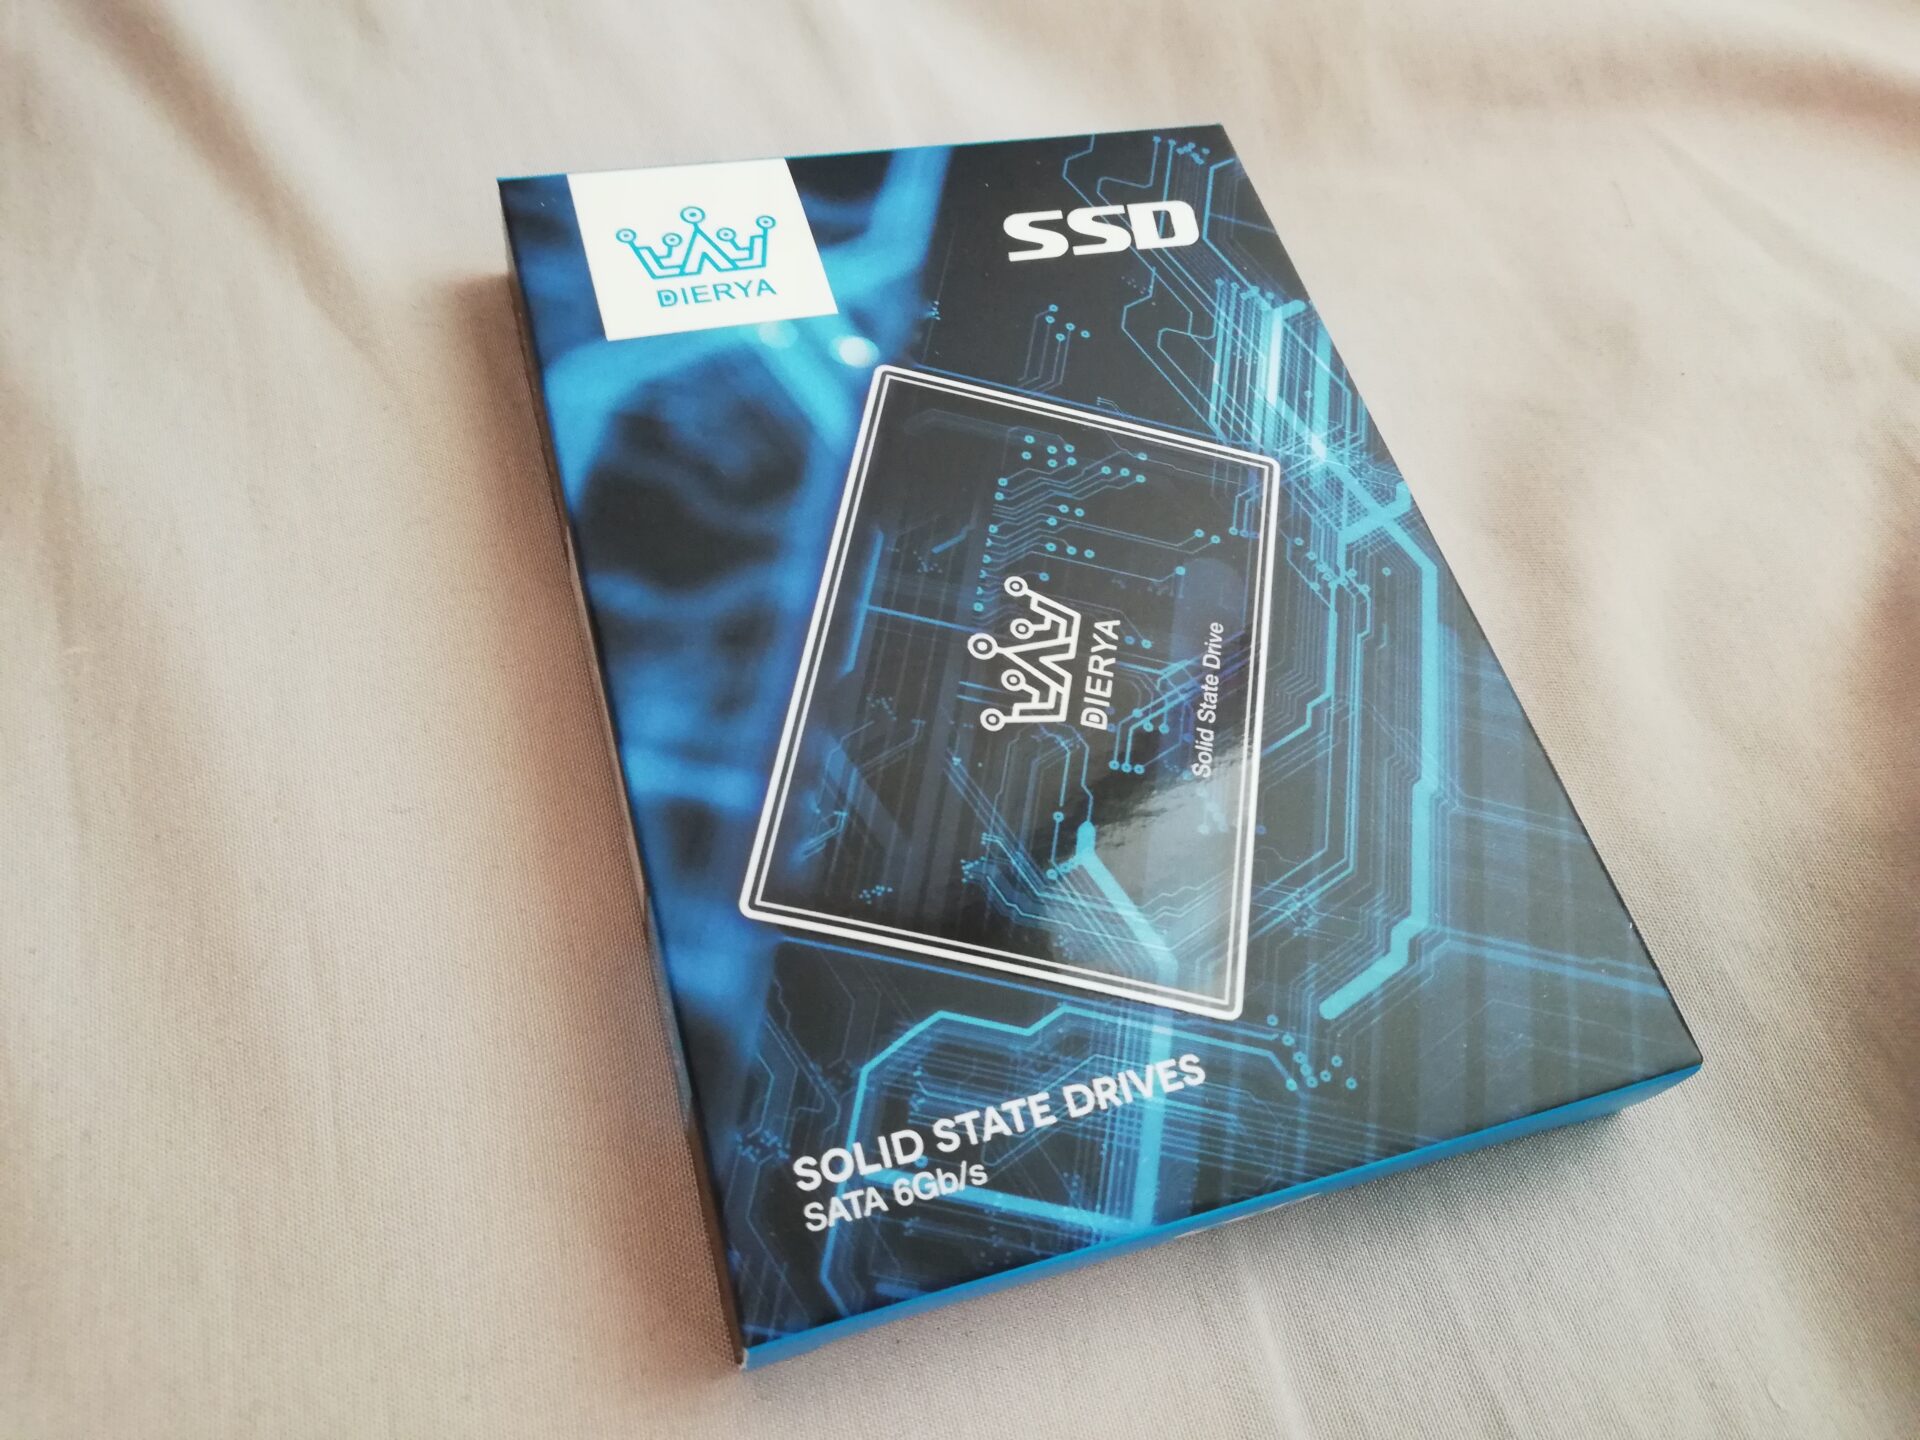 DIERYA 250GB SSD 3D Nand SSD レビュー